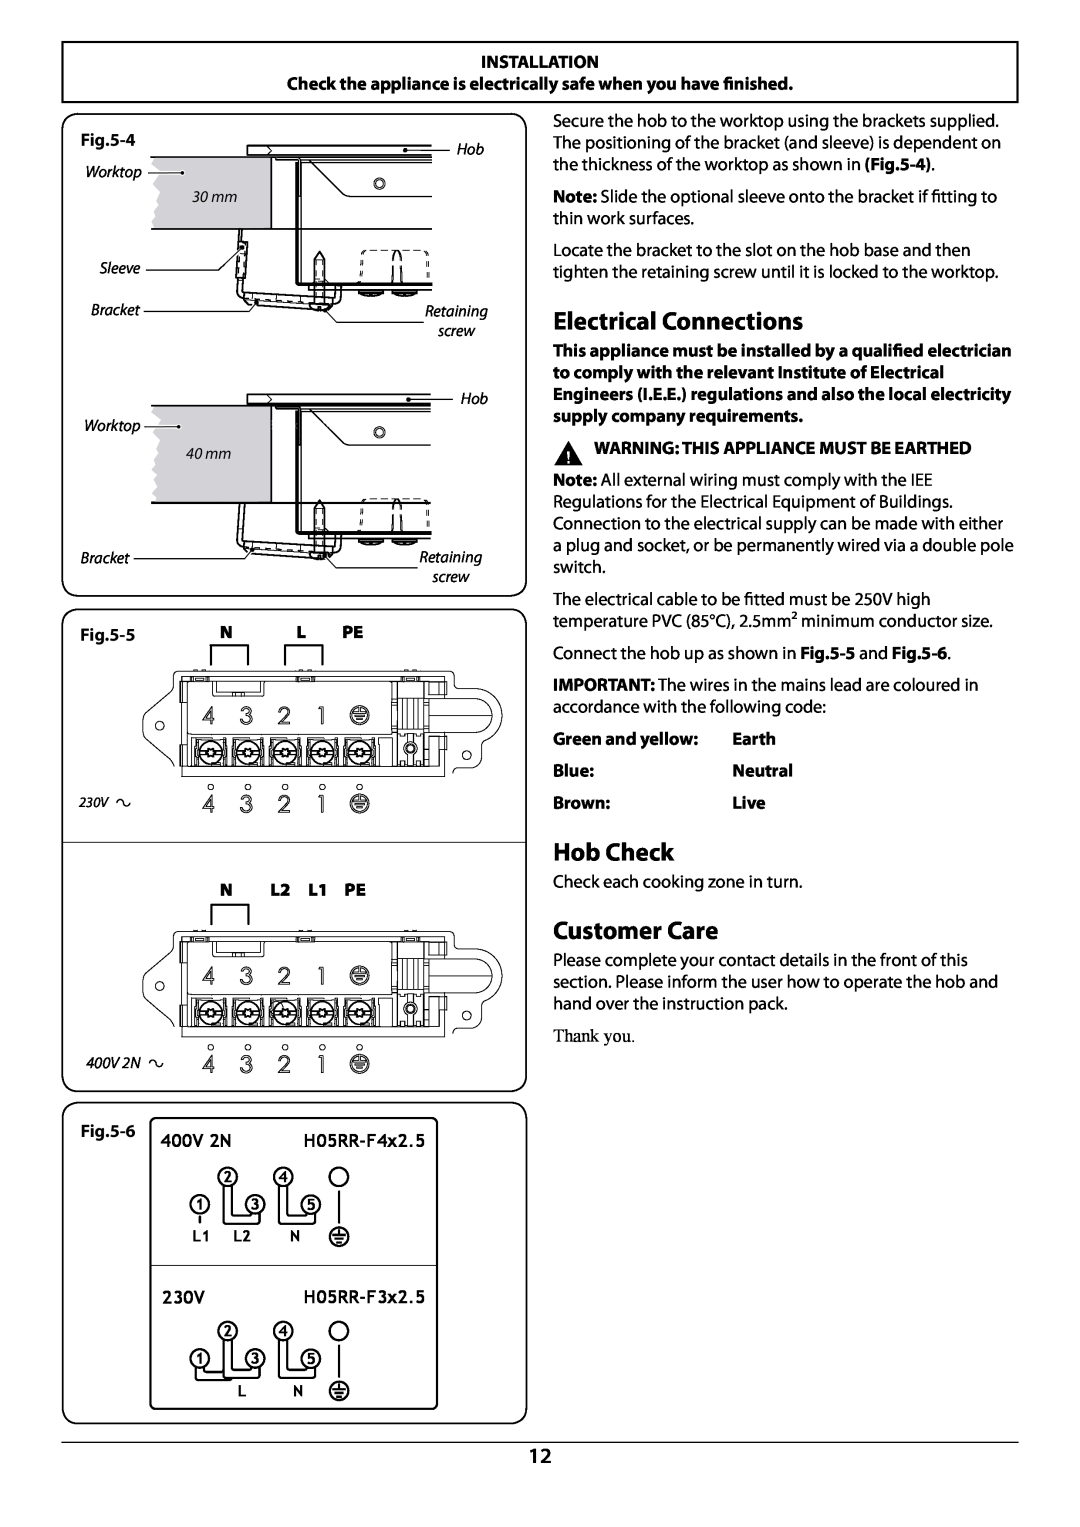 Rangemaster RI60 manual Hob Check, Customer Care, Electrical Connections, H05RR-F4x2.5, 230V H05RR-F3x2.5 